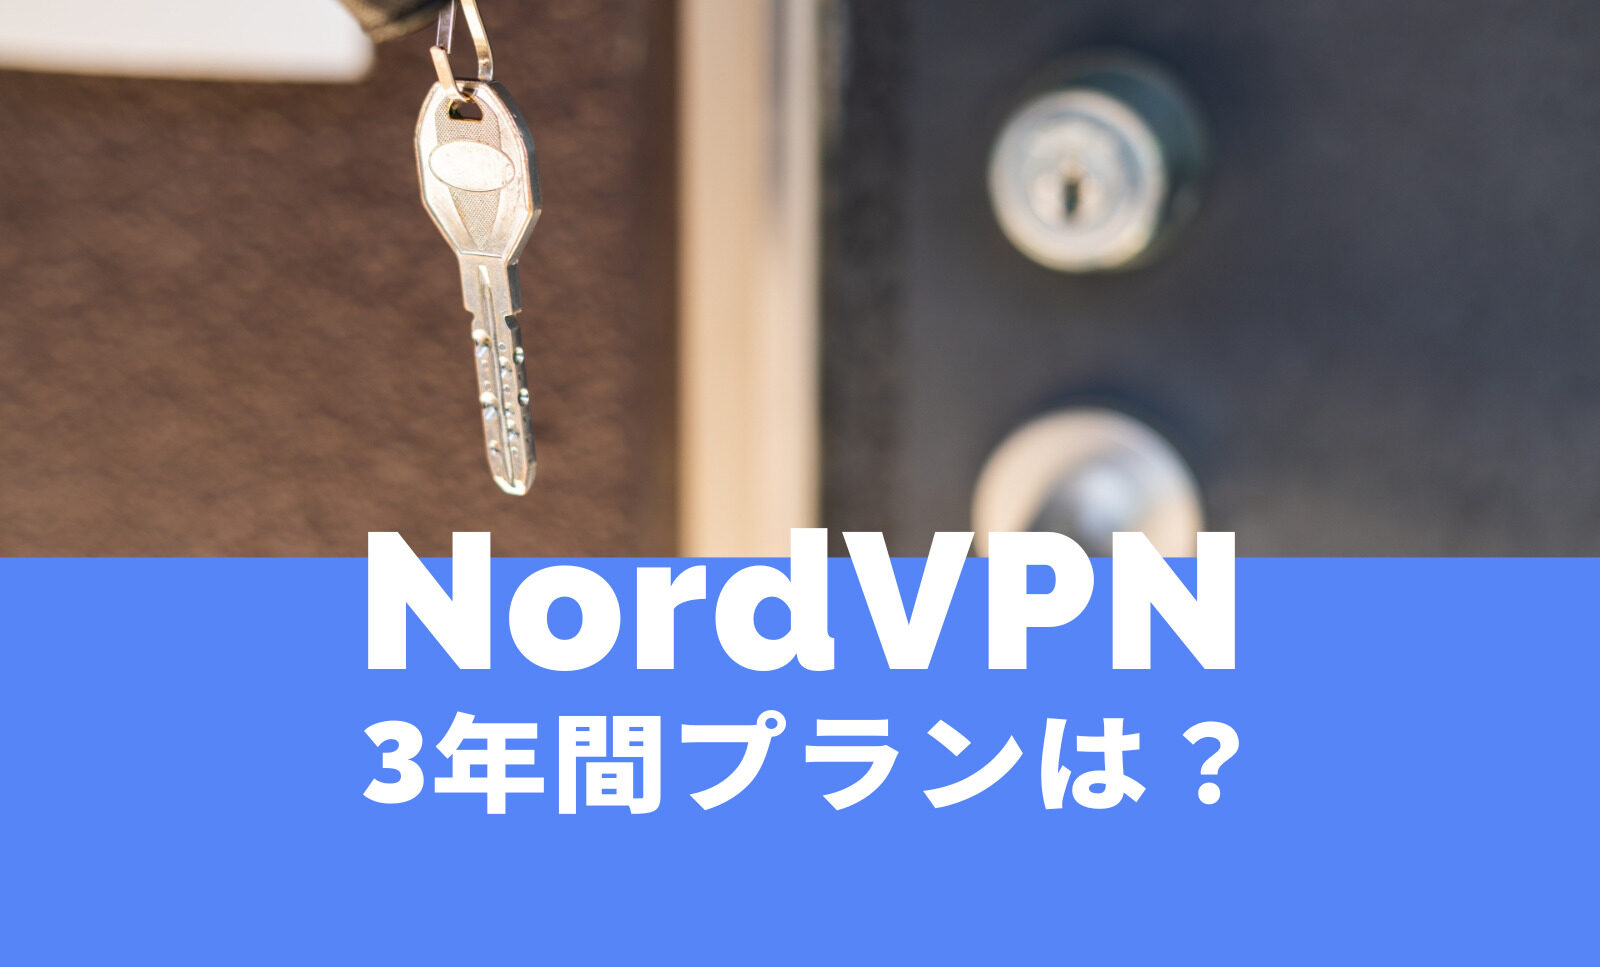 NordVPN(ノードVPN)に3年間プラン契約はある？のサムネイル画像